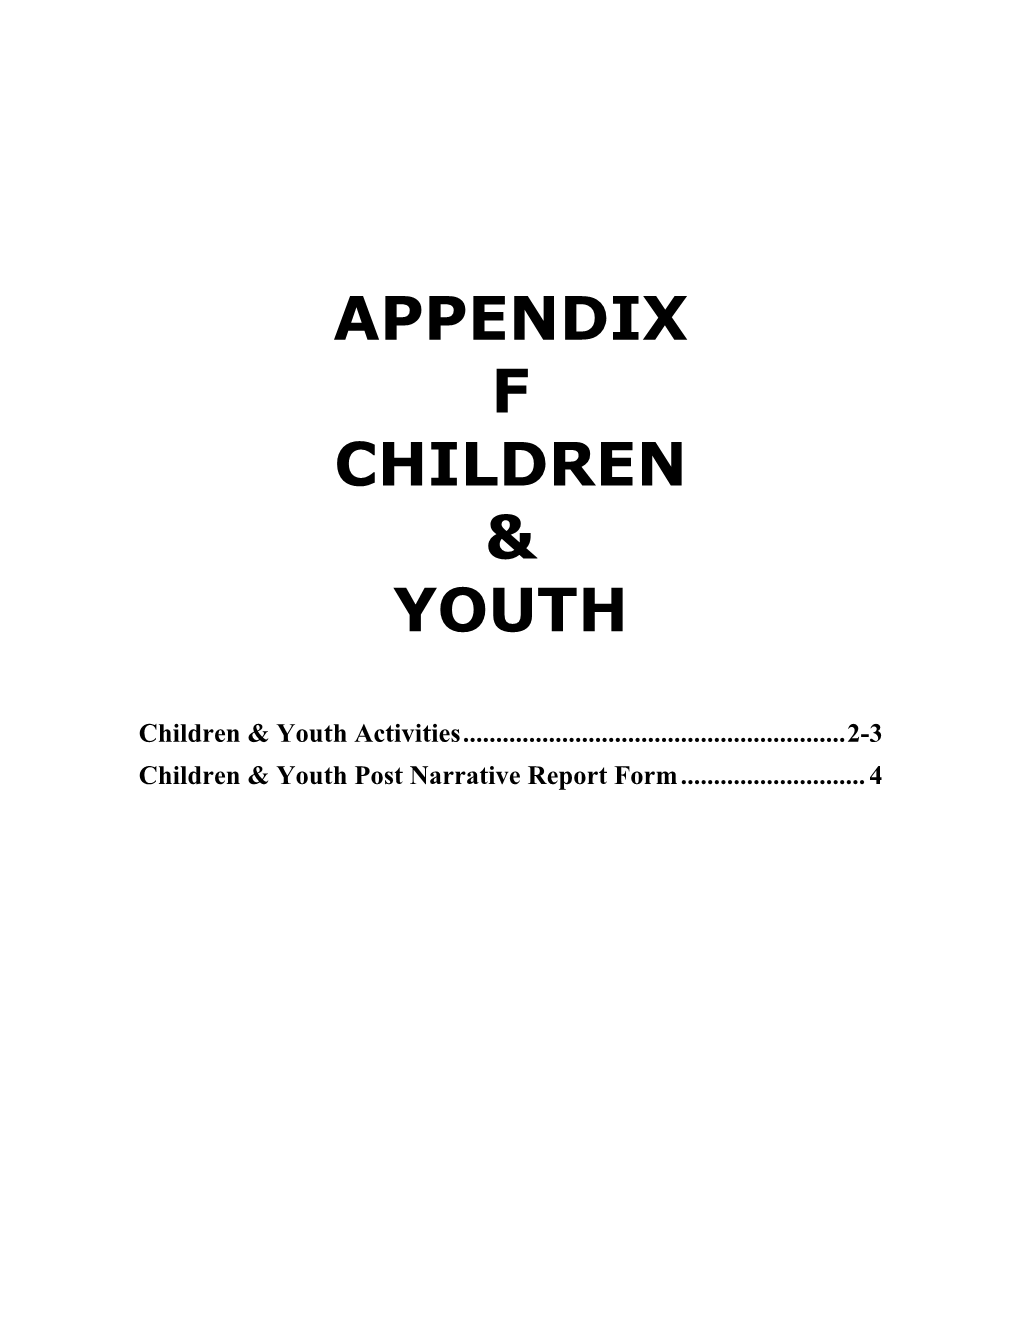 Appendix F Children & Youth